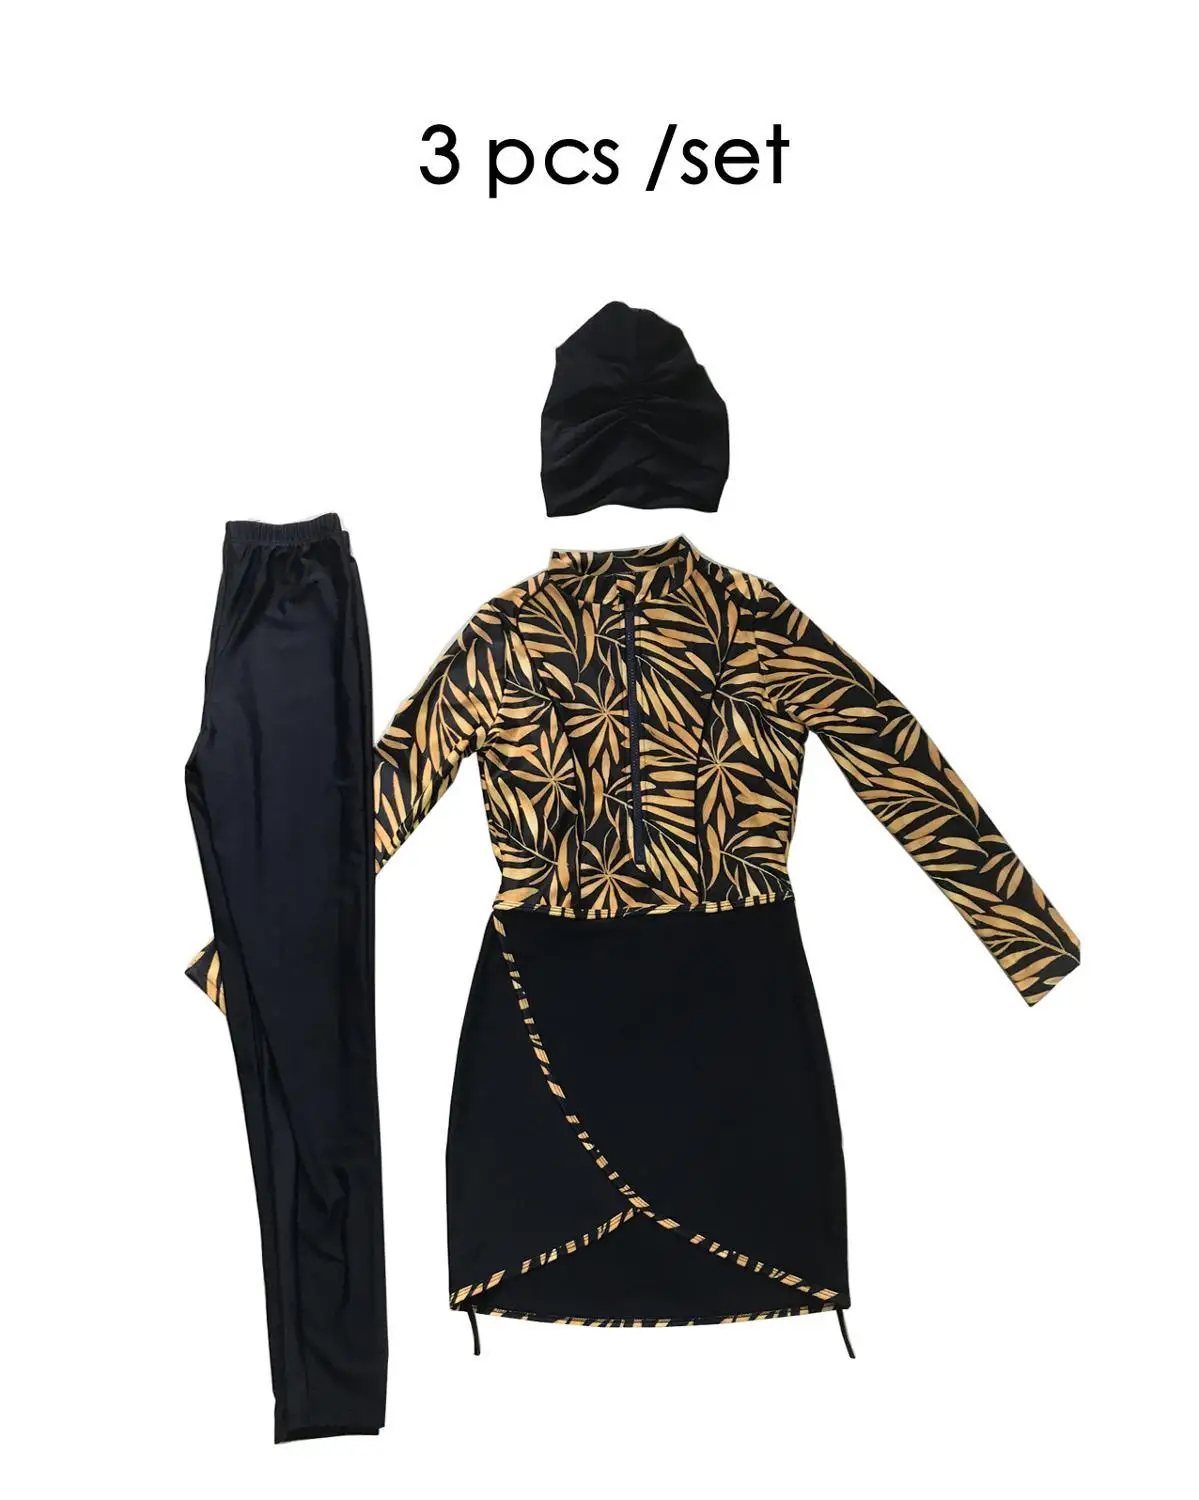 Dest swimwear for women full cover islamic long sleeve burkini turban maillots de bains thumb200